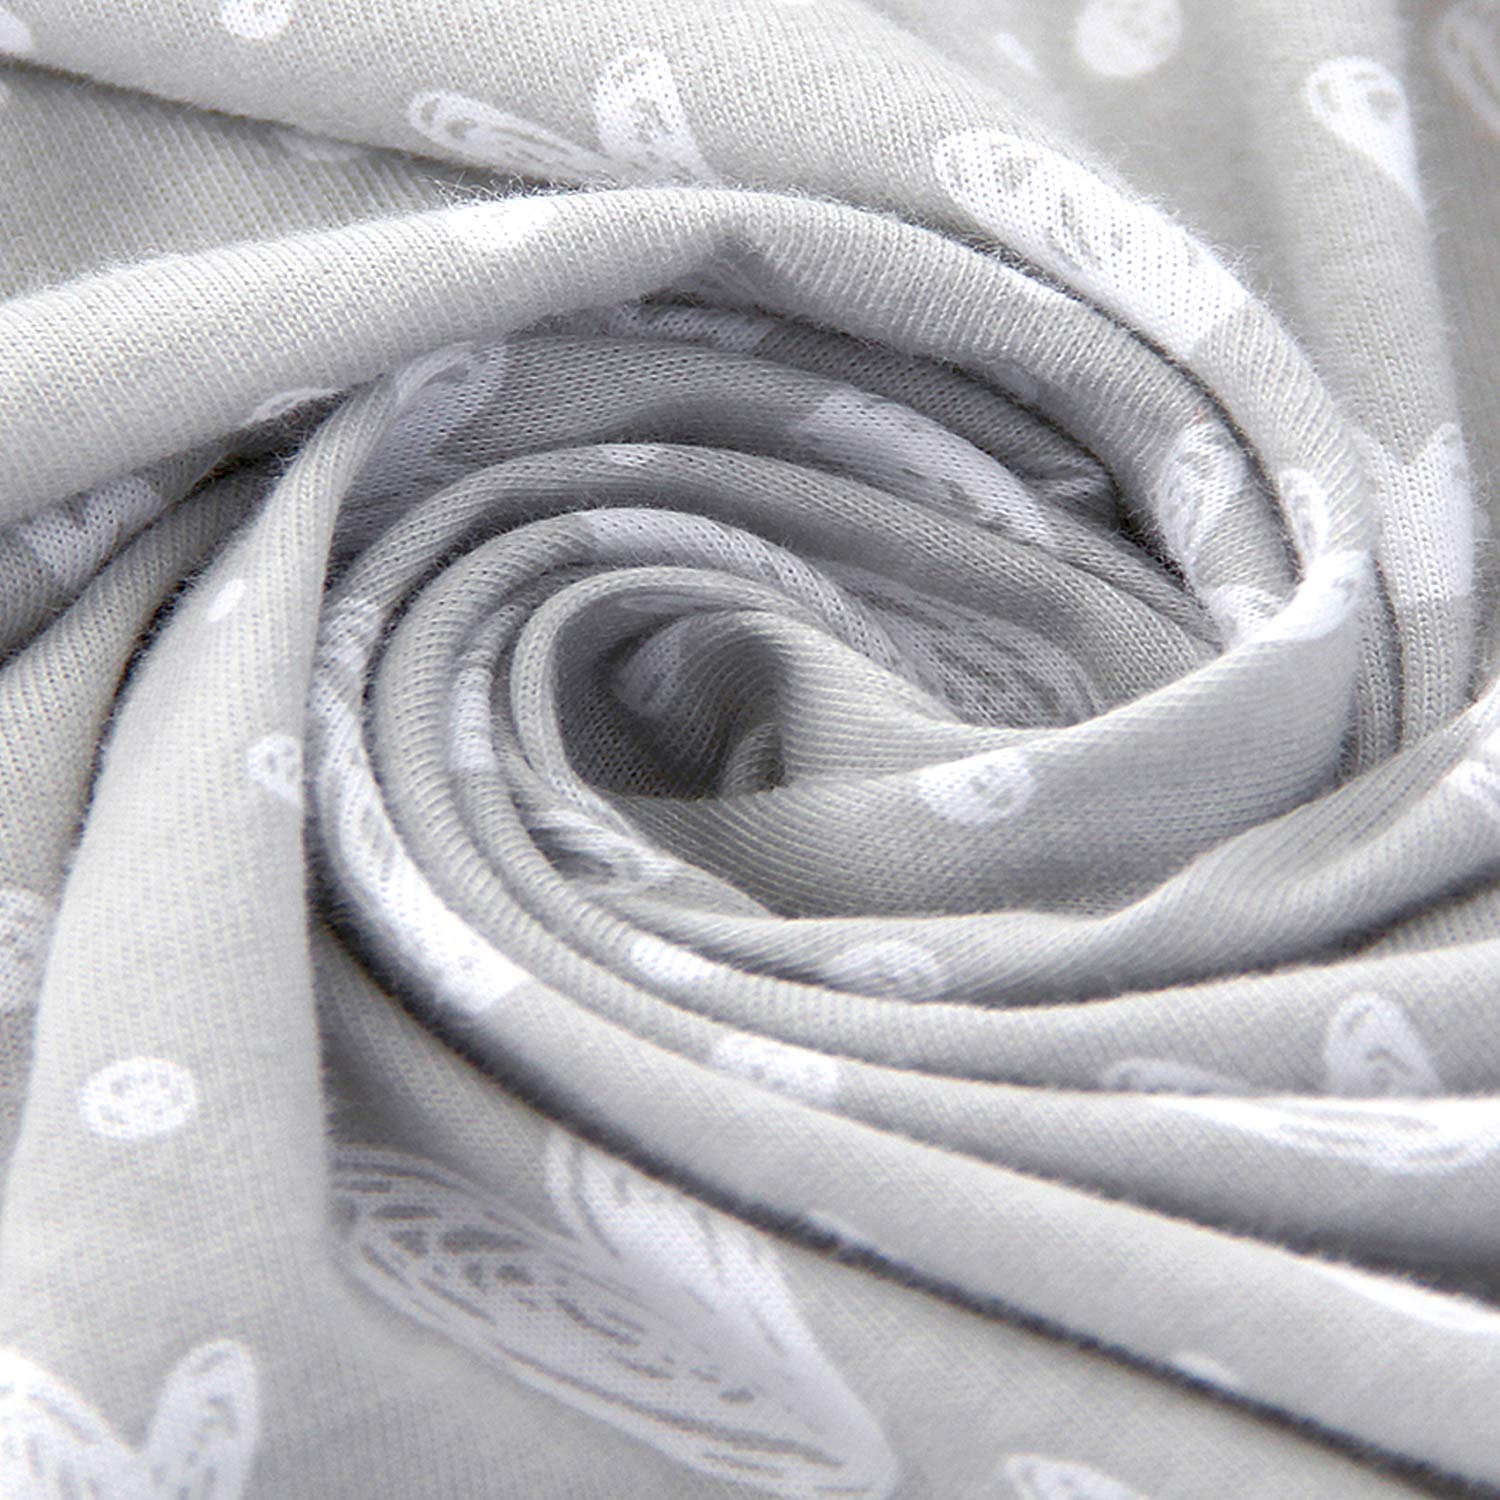 Toddler Pillowcase- 2 Pack, Ultra Soft 100% Jersey Cotton, Envelope Style, Heart Print, Gray - Biloban Online Store